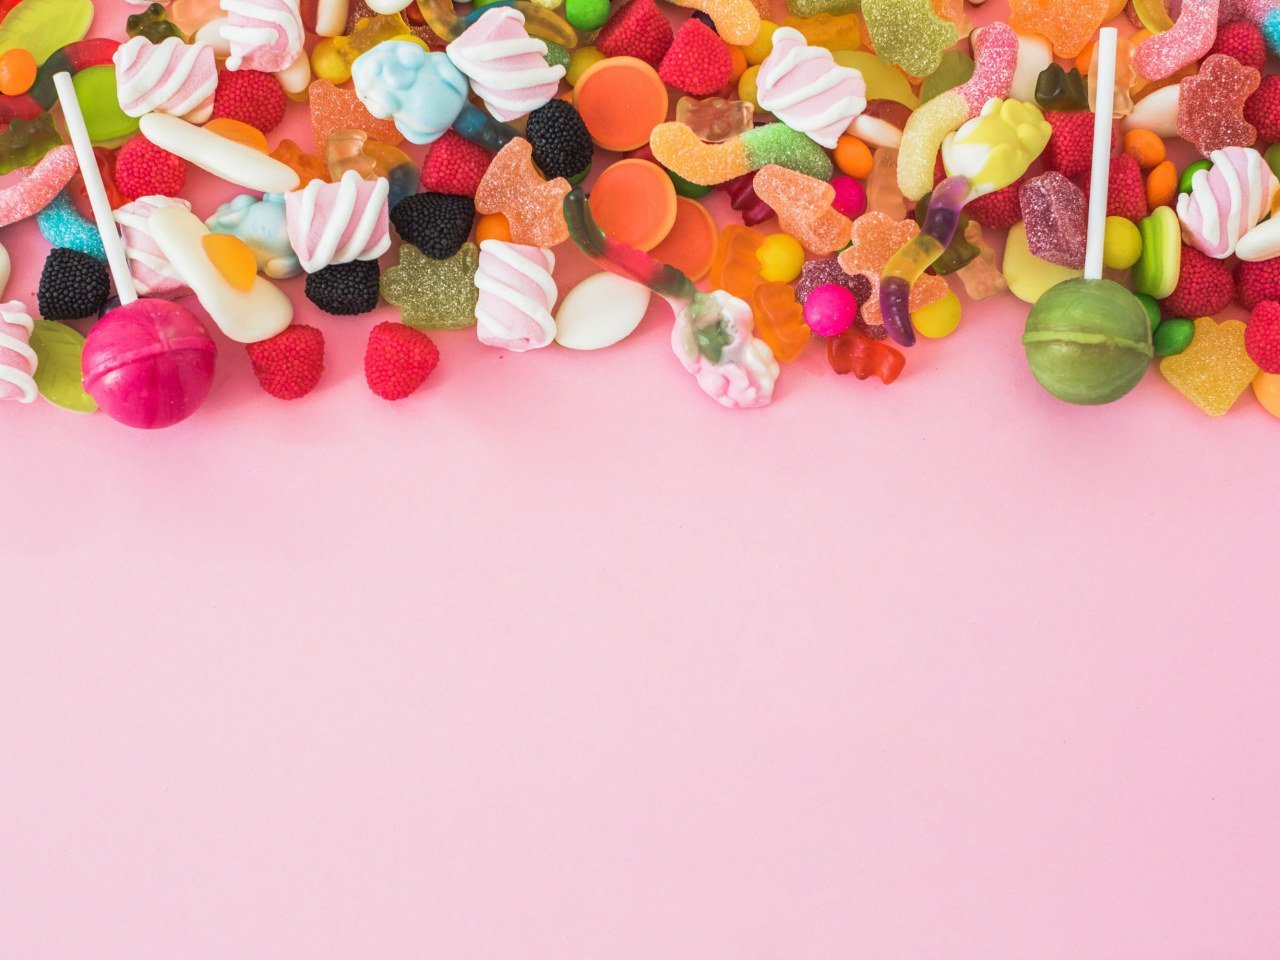 Food Candy wallpaper, Lollipop, Sweets • Wallpaper For You HD Wallpaper For Desktop & Mobile